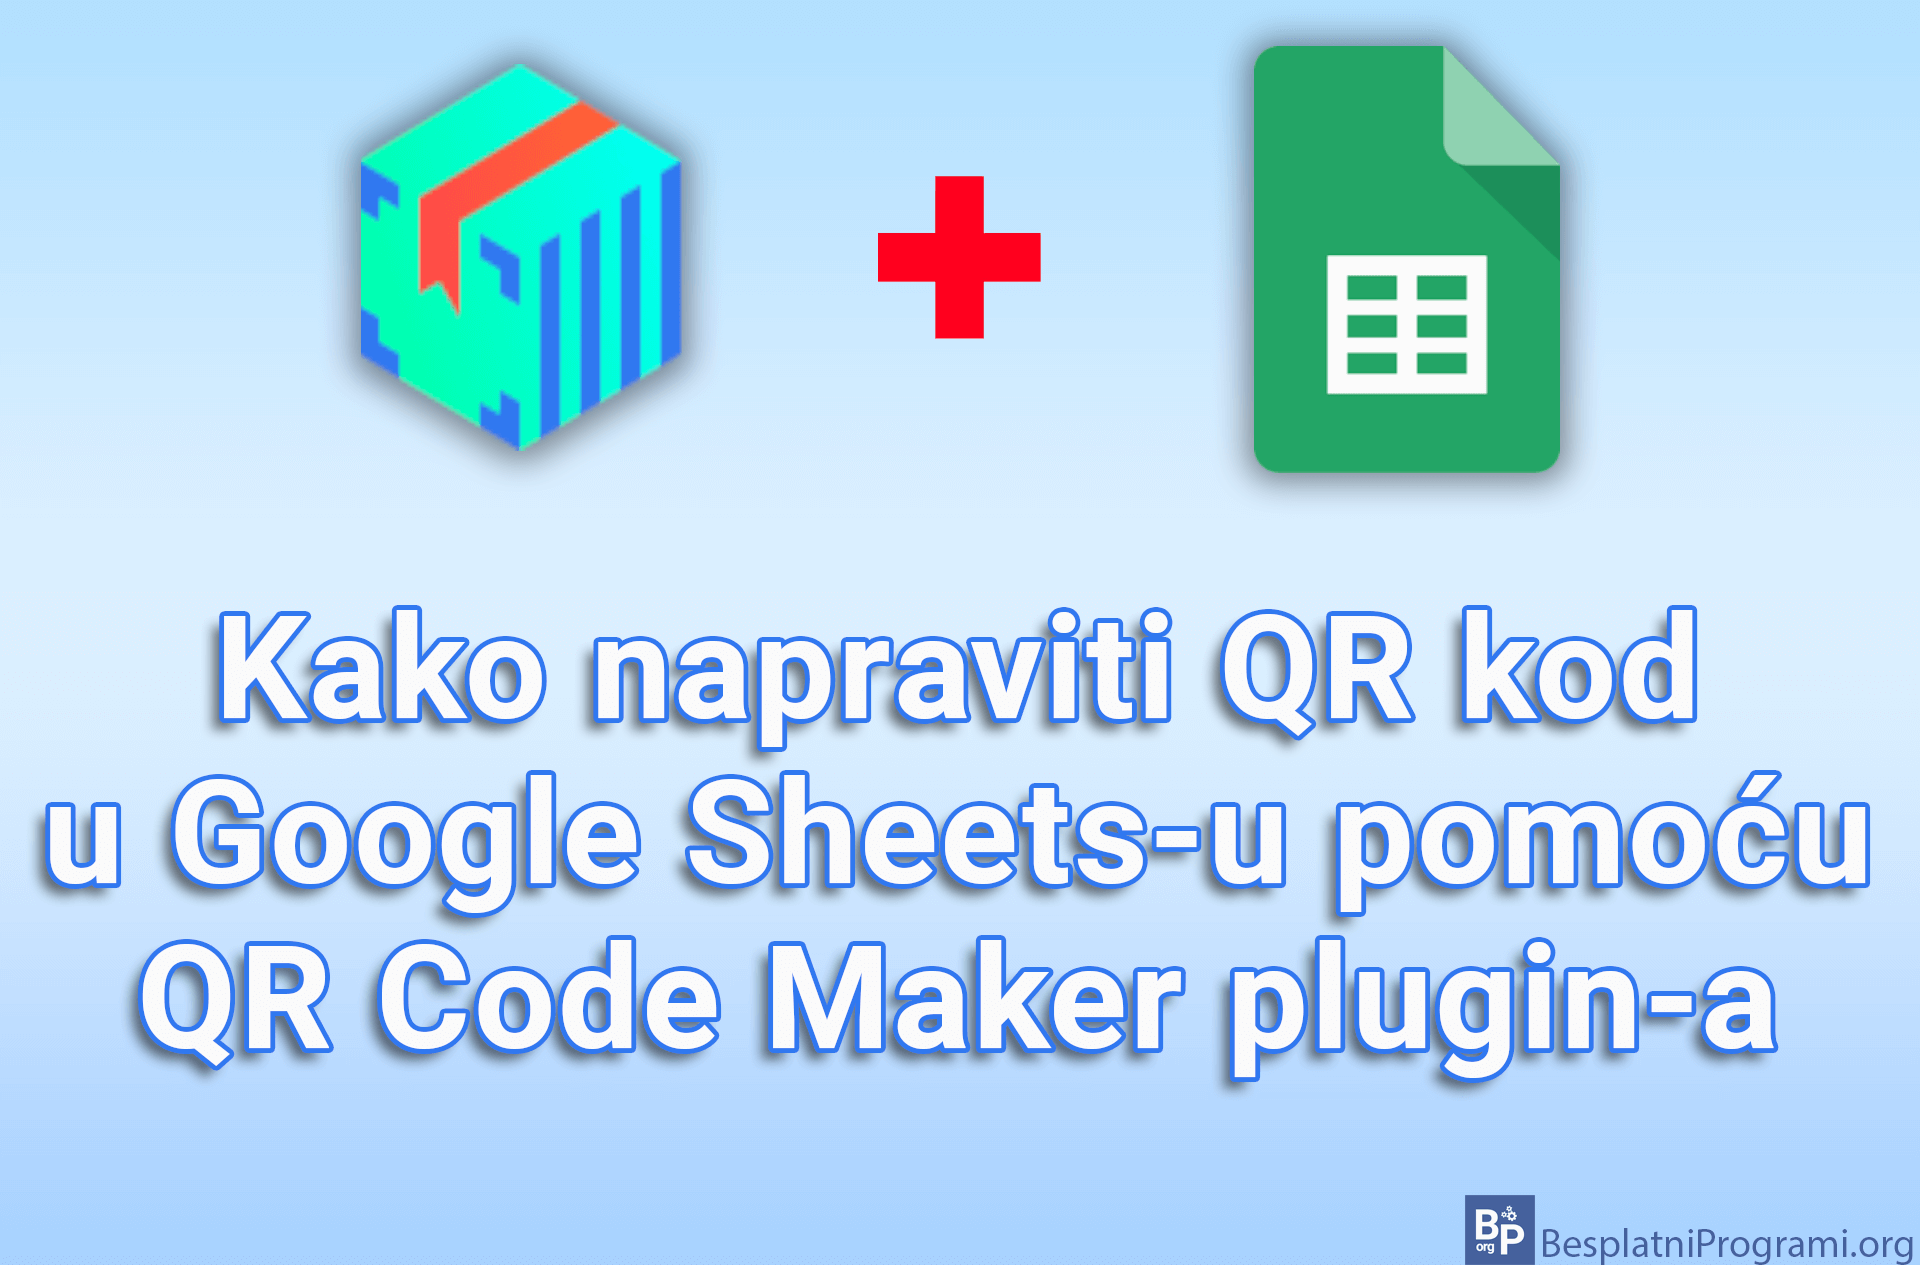 Kako napraviti QR kod u Google Sheets-u pomoću QR Code Maker plugin-a